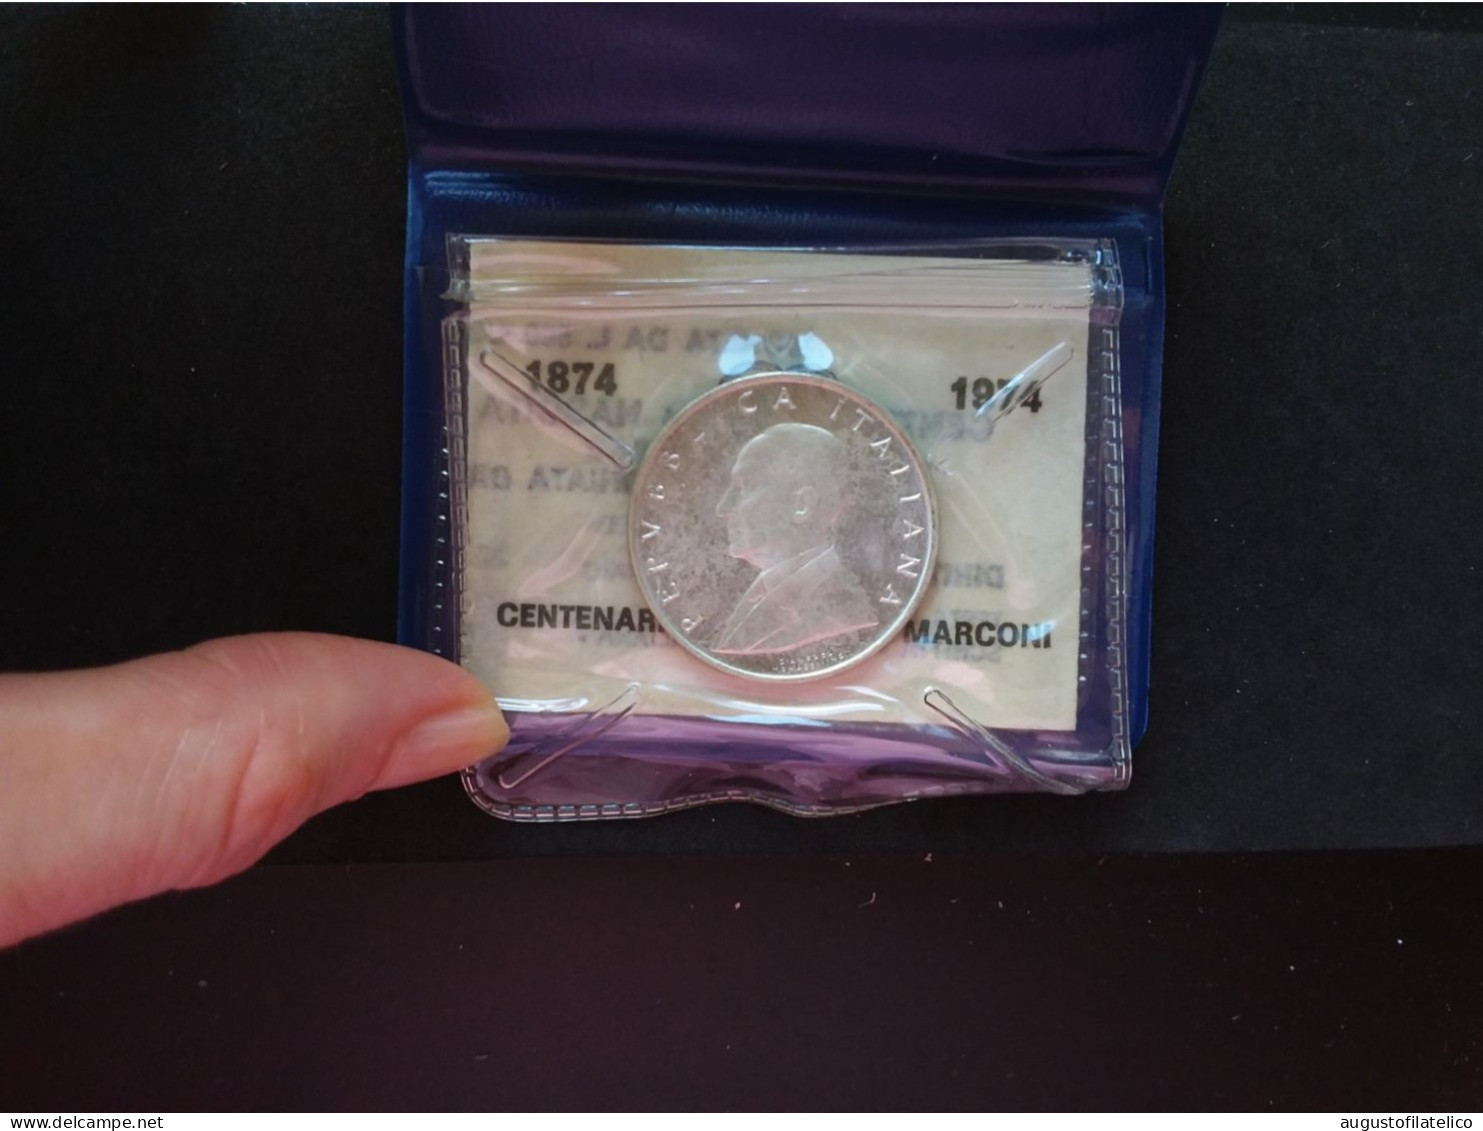 500 Lire Marconi - Moneta In Argento + Spese Postali - Gedenkmünzen